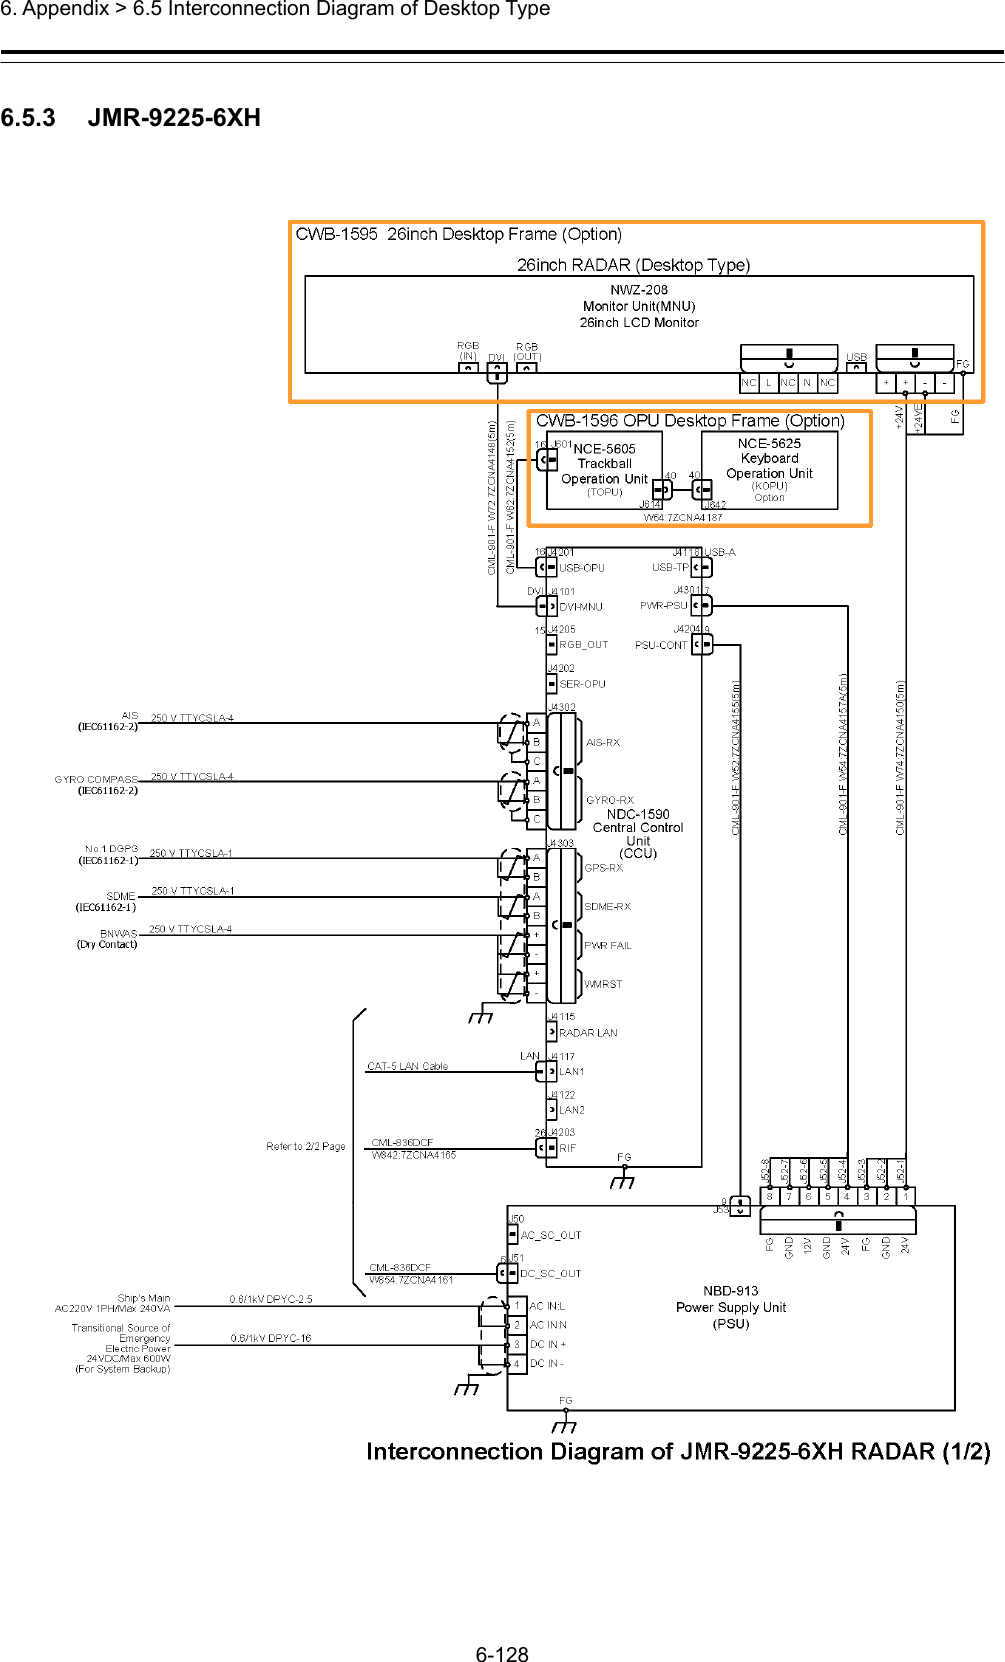  6. Appendix &gt; 6.5 Interconnection Diagram of Desktop Type 6-128  6.5.3   JMR-9225-6XH  